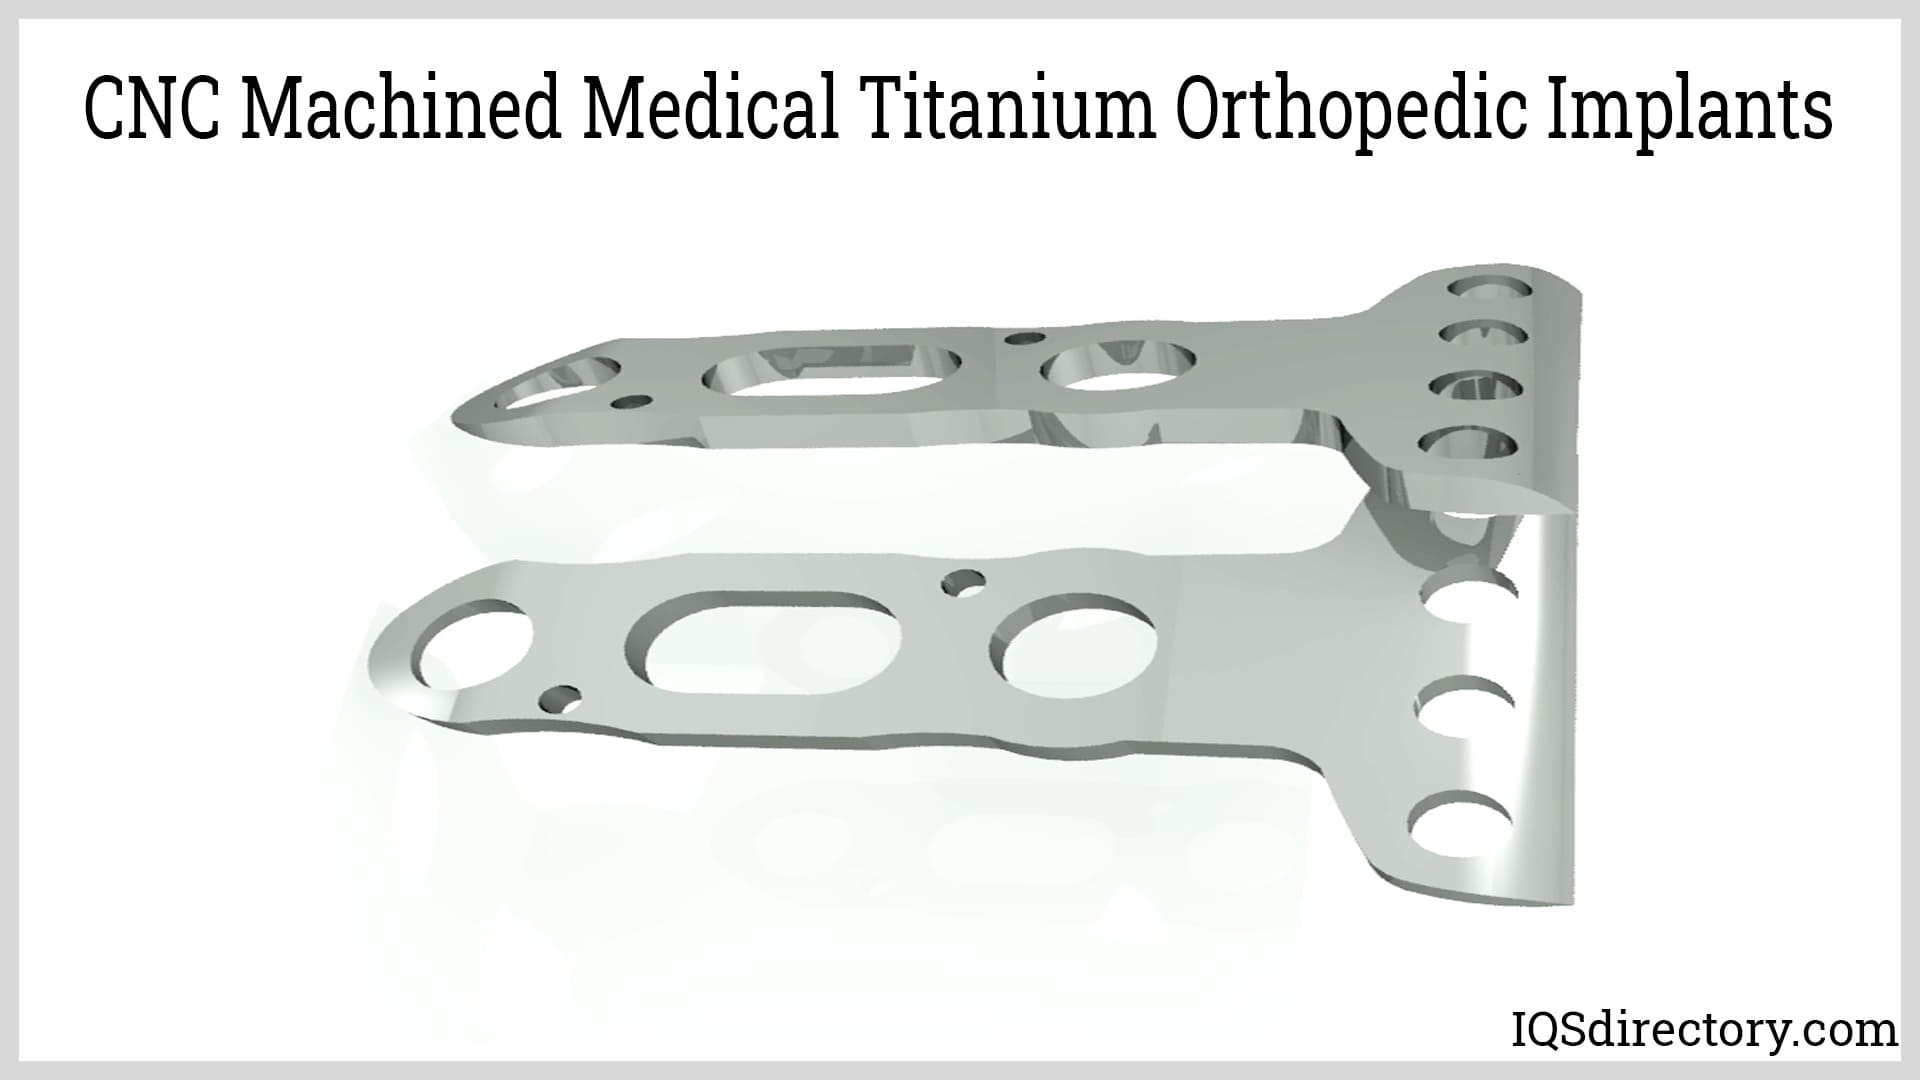 Orthopedic Implants made of Titanium